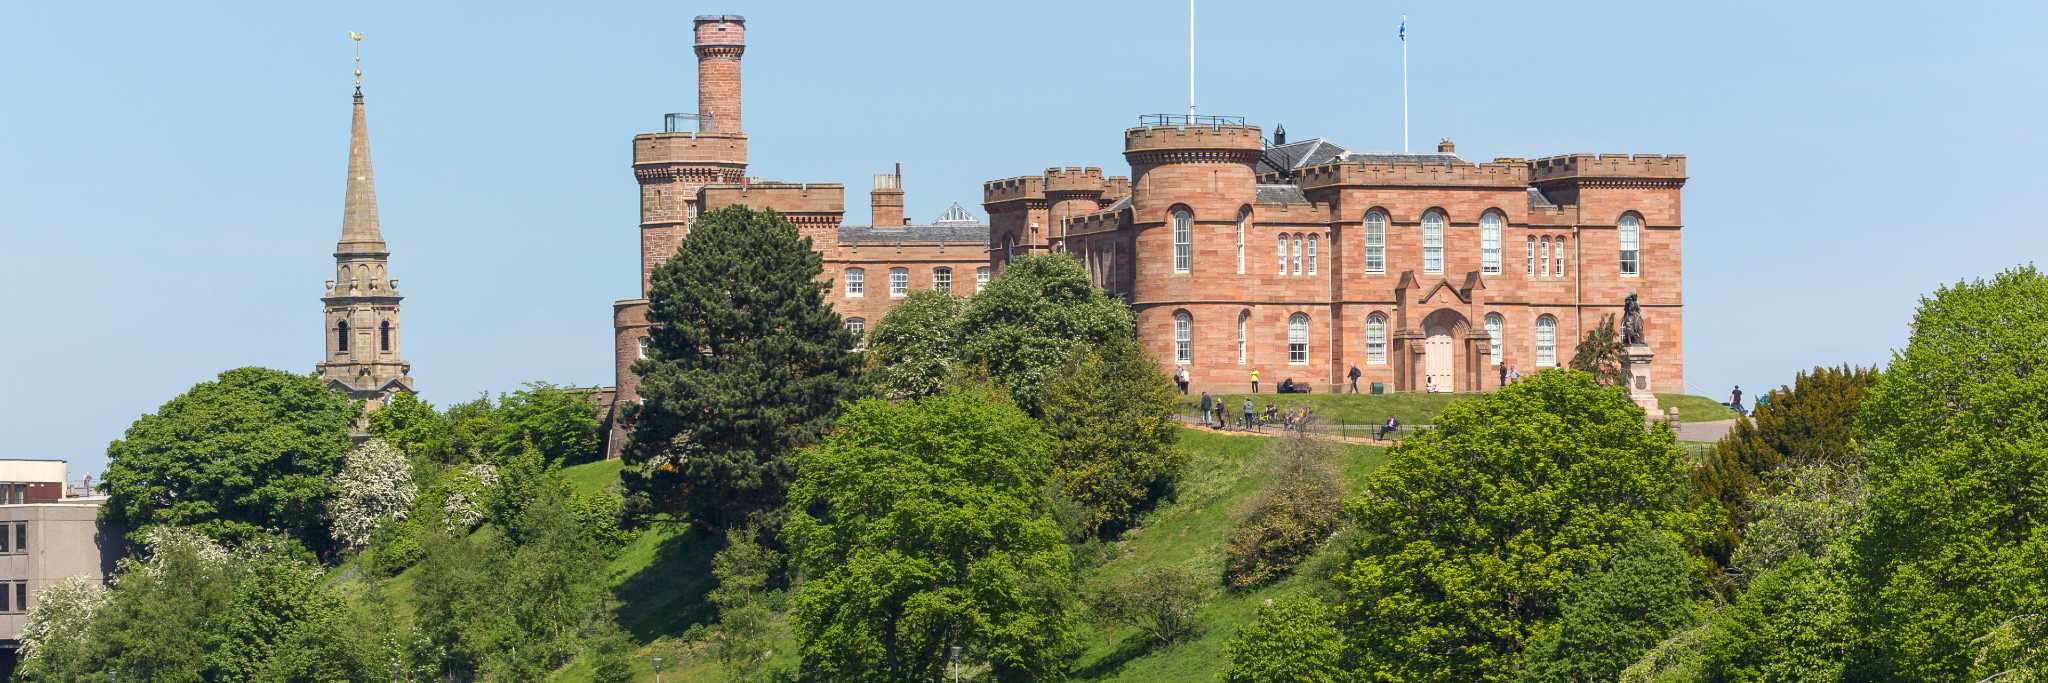 Inverness Castle © VisitScotland / Kenny Lam